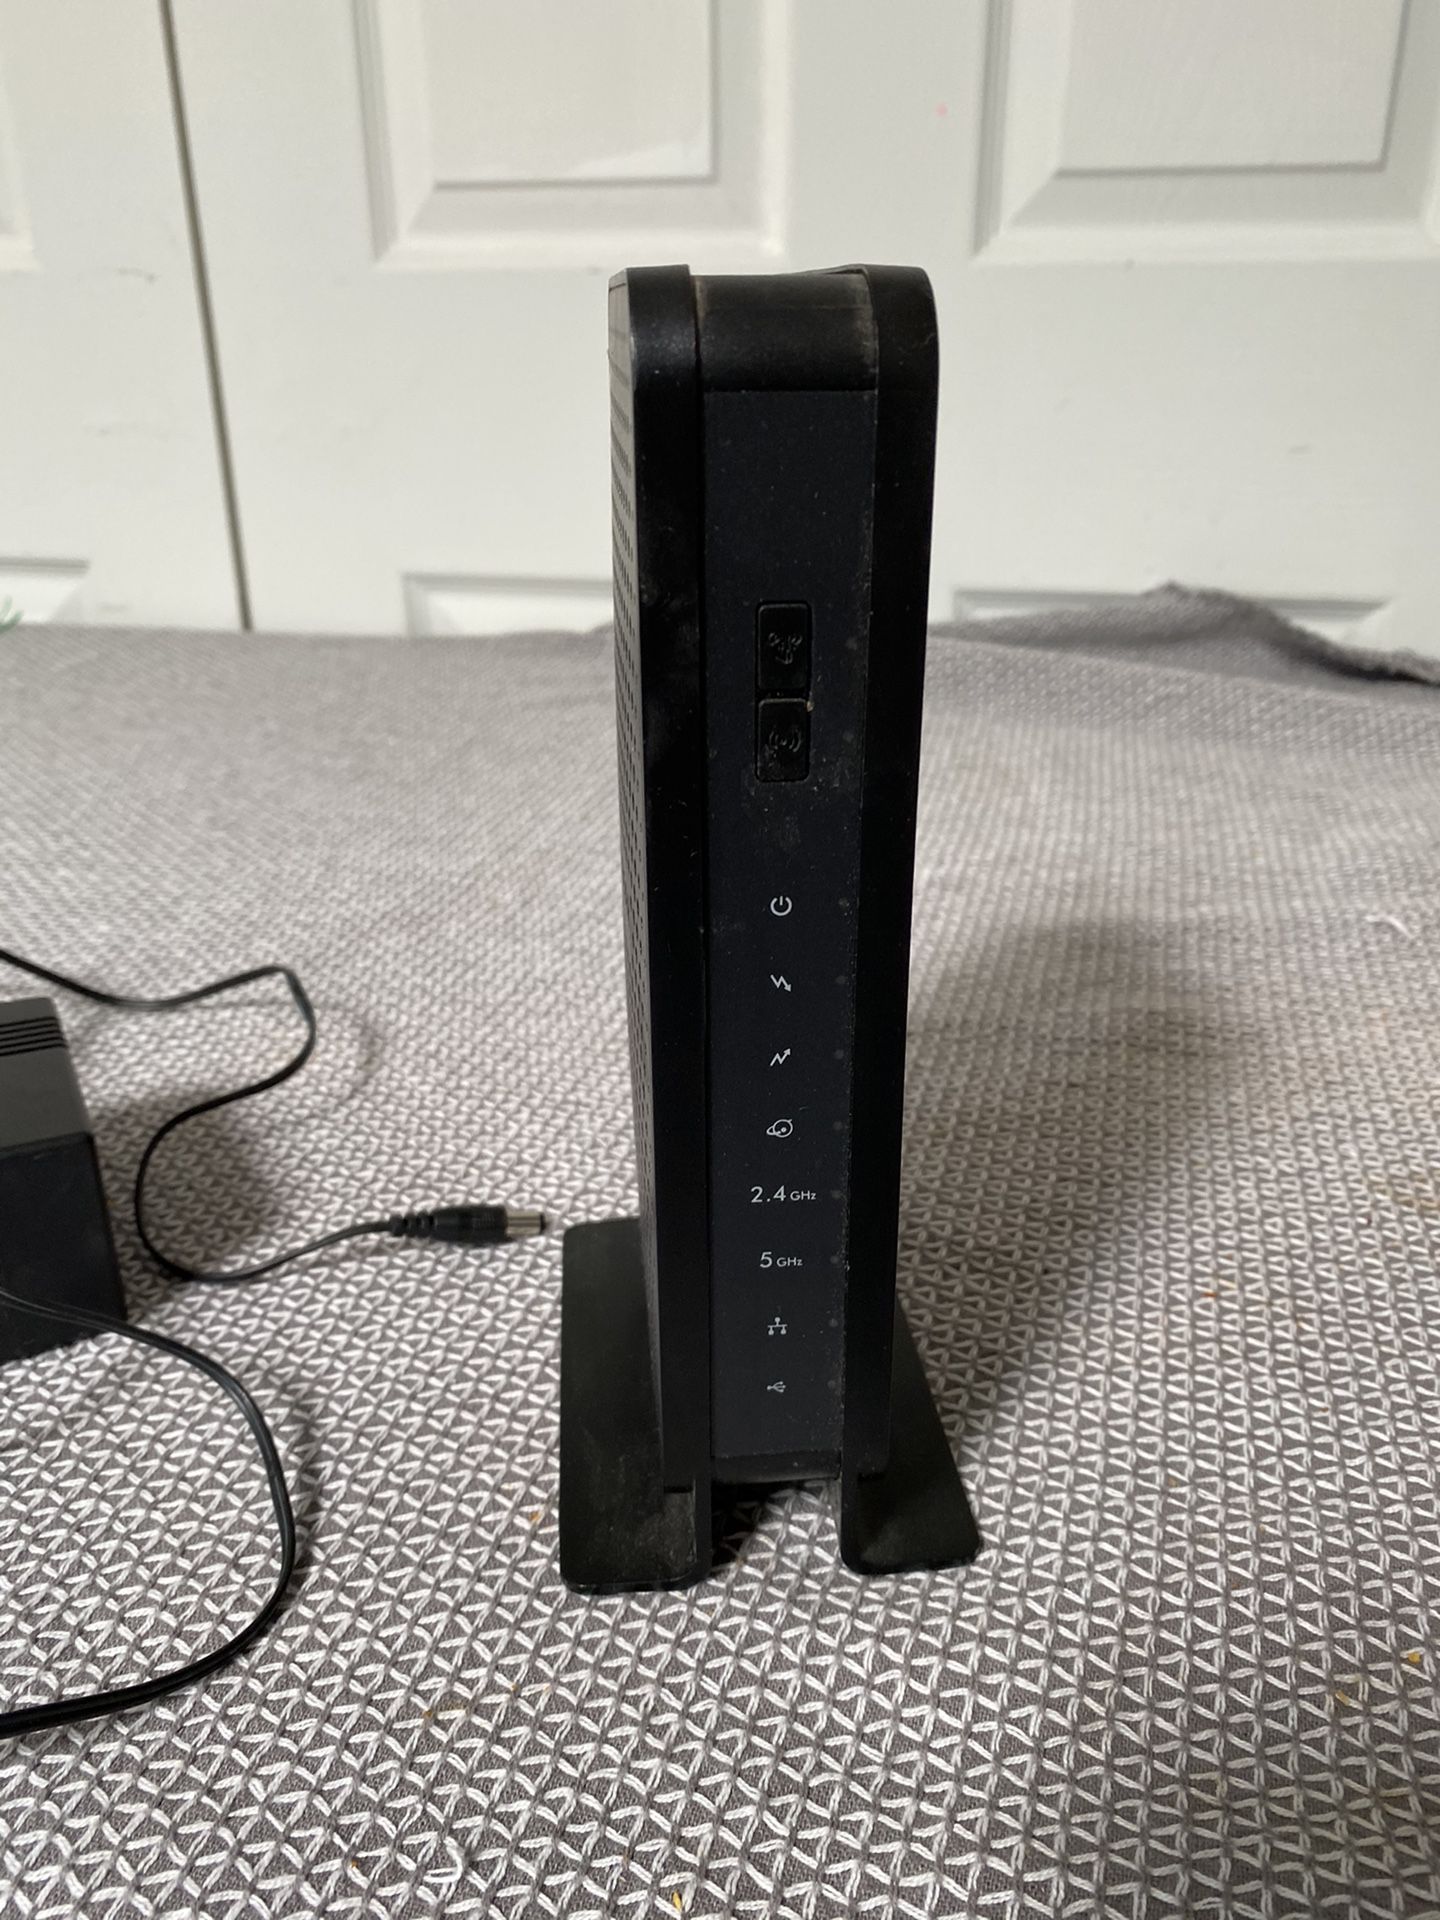 Netgear c3700 router and modem